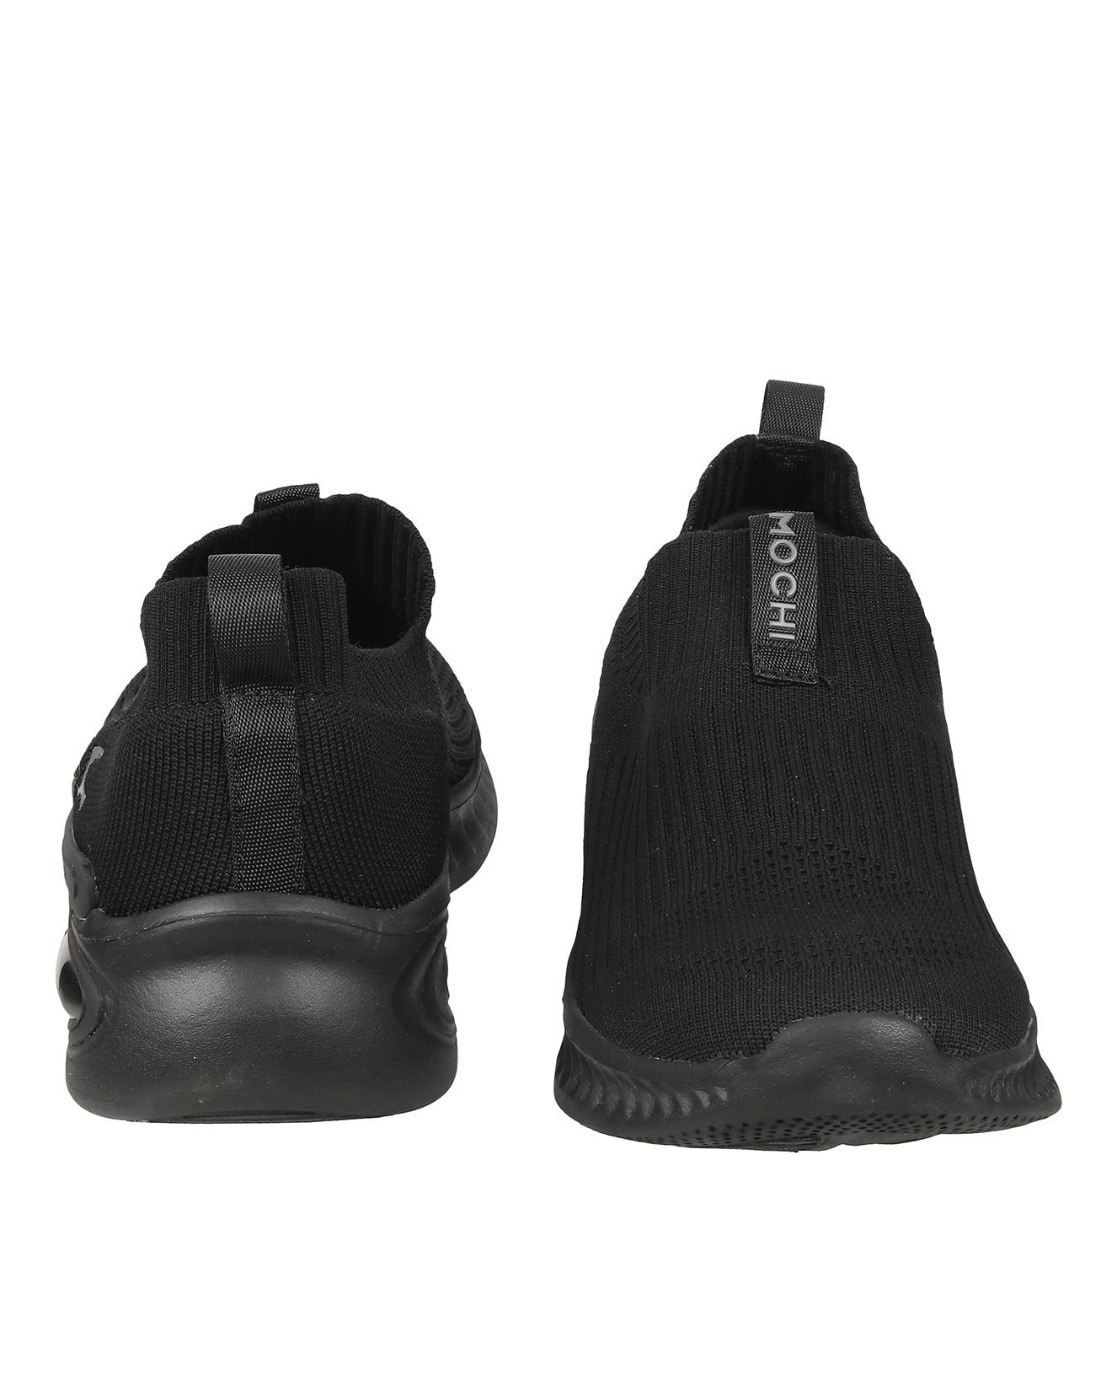 Buy Mochi Mens Black Sports Slip-OnsMochi Black Woven Sneakers online